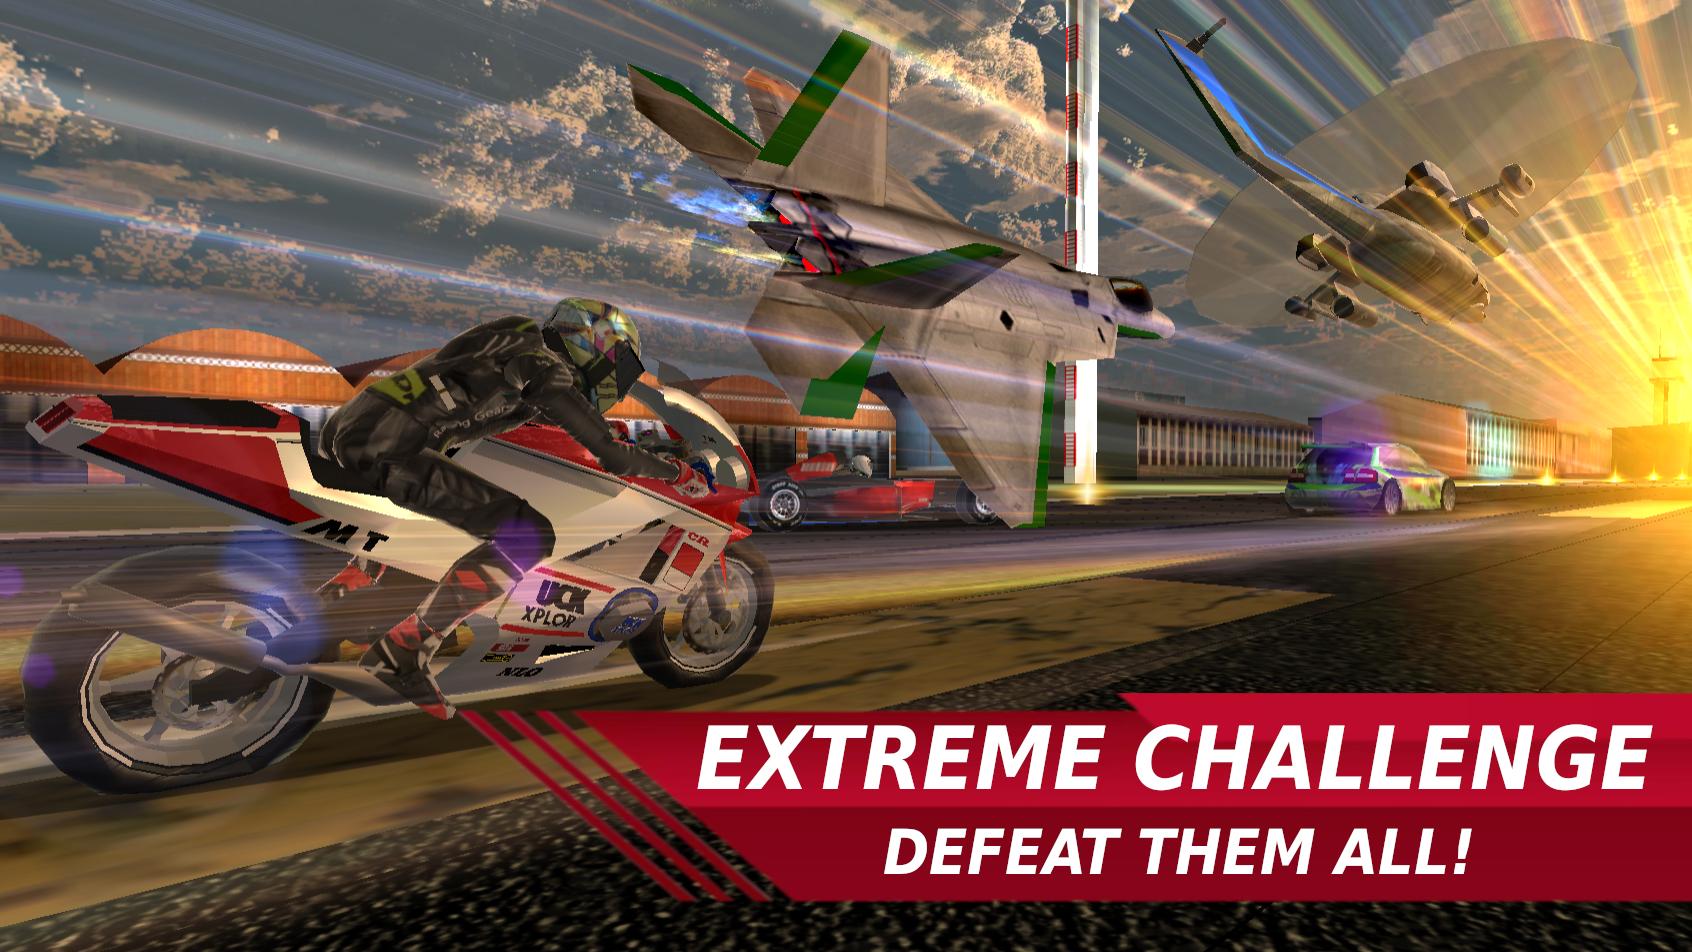 Rebel Gears Drag Bike Racing / CSR Race Moto Game 1.3.2 Screenshot 15